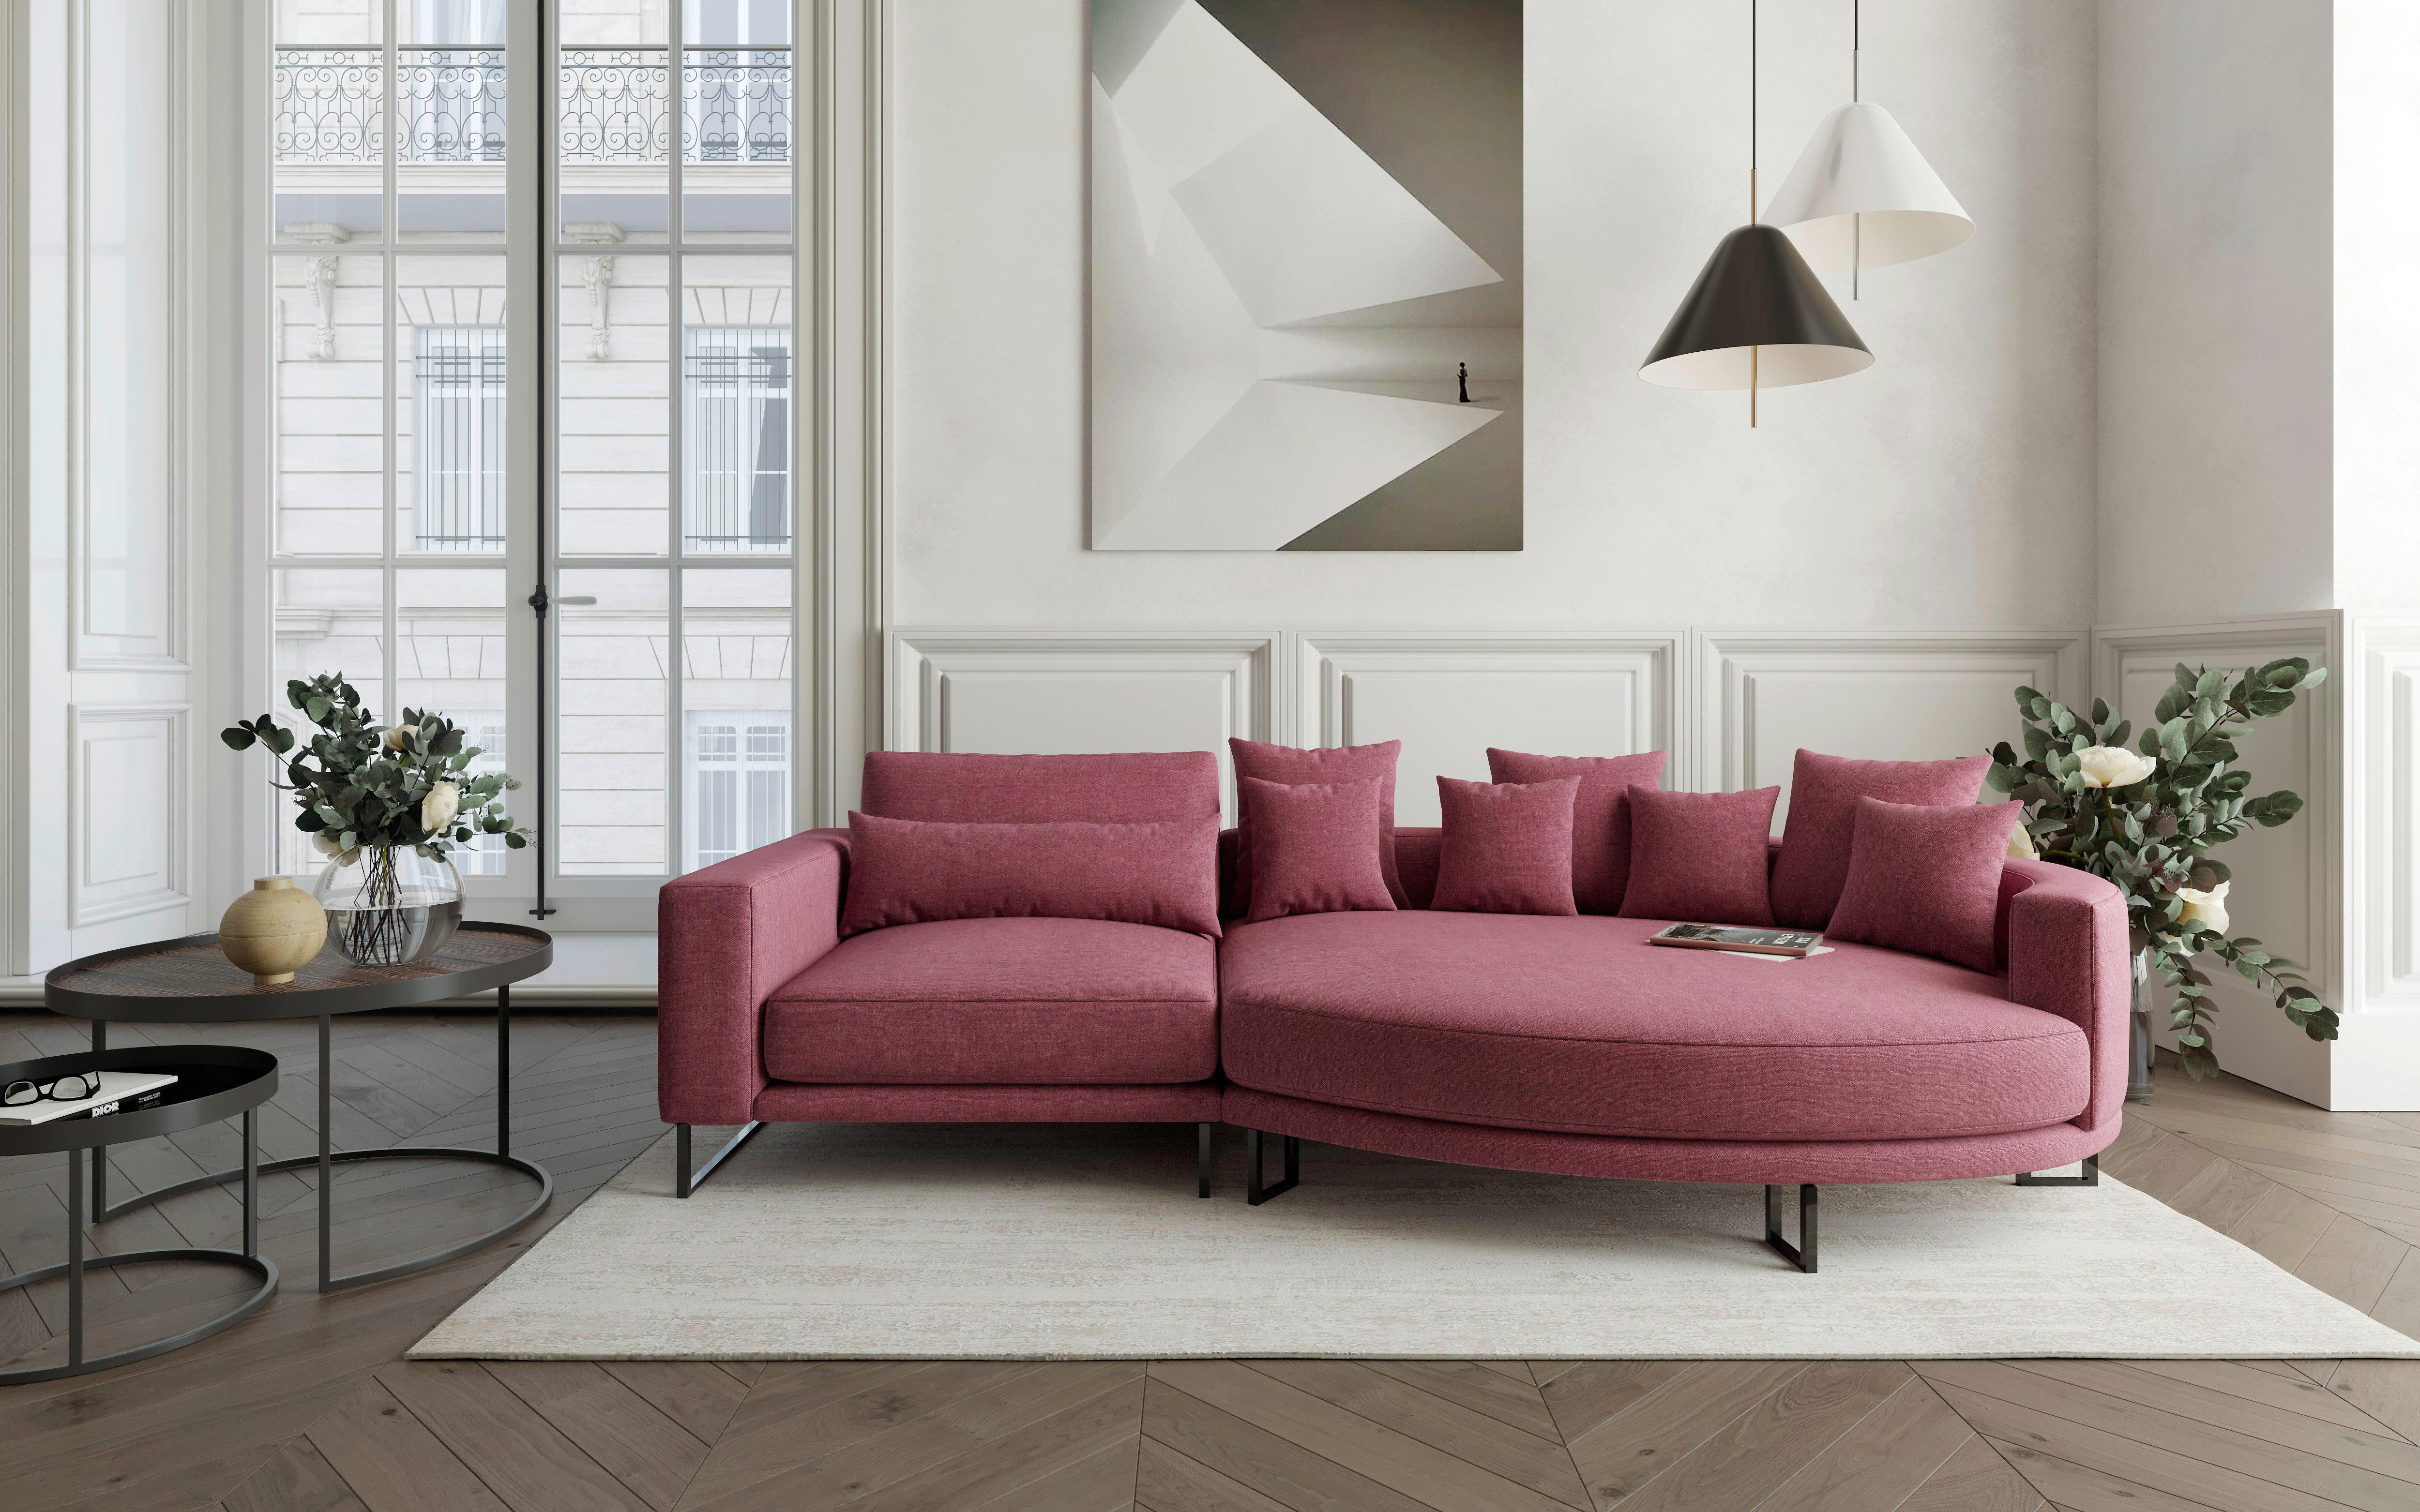 WOHNLANDSCHAFT Pink Flachgewebe  - Pink/Edelstahlfarben, Design, Textil/Metall (283/150cm) - Livetastic